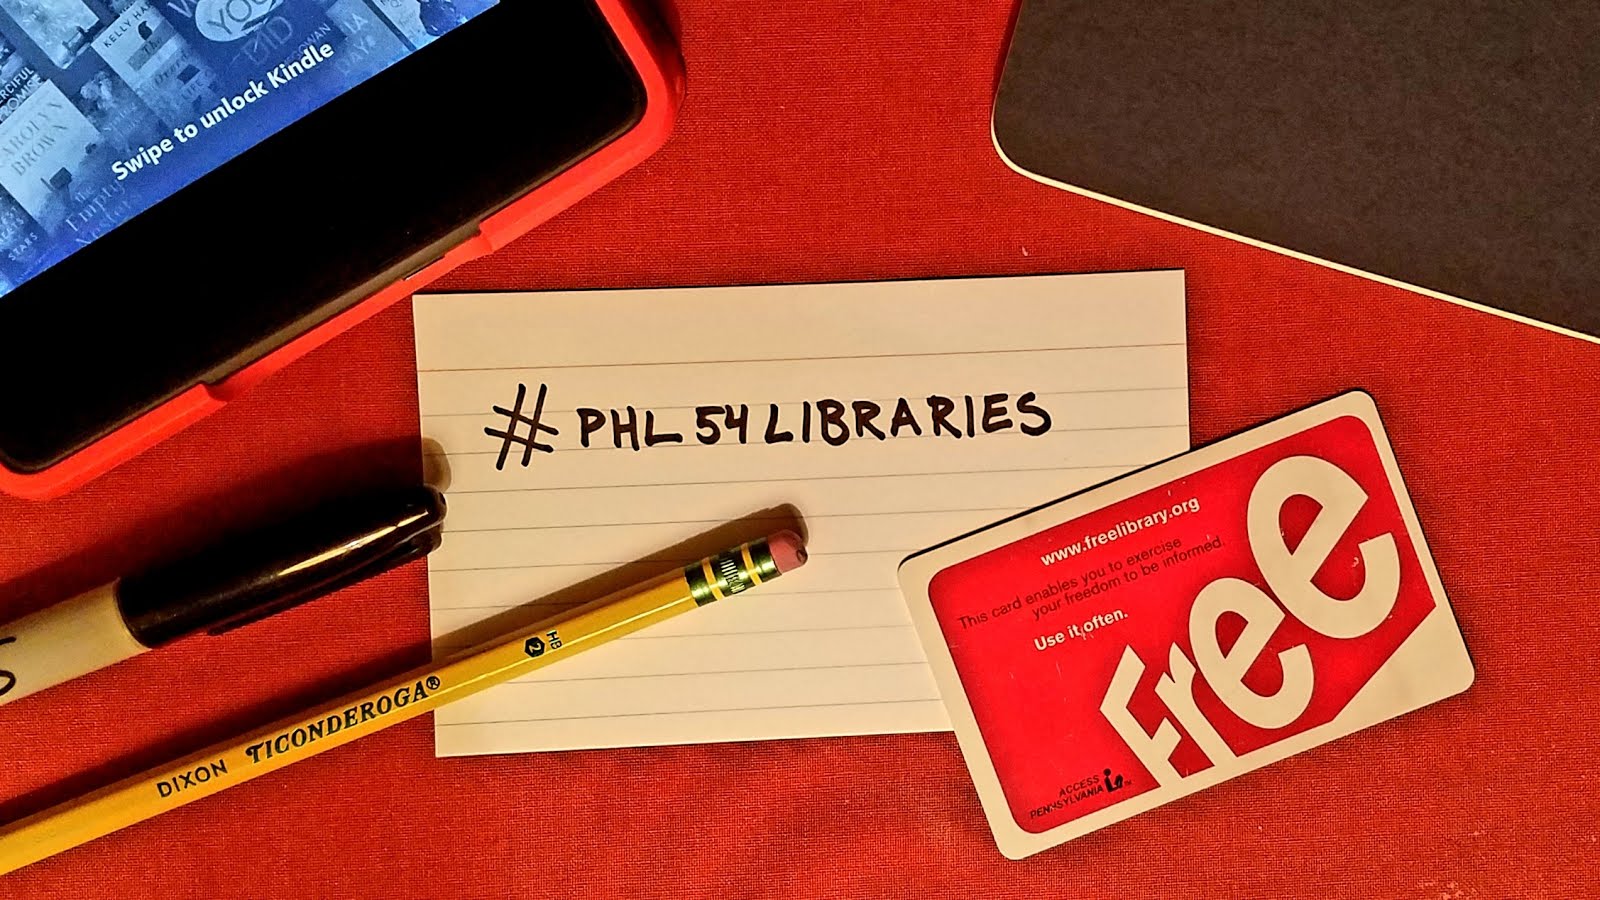 PHL 54 Libraries